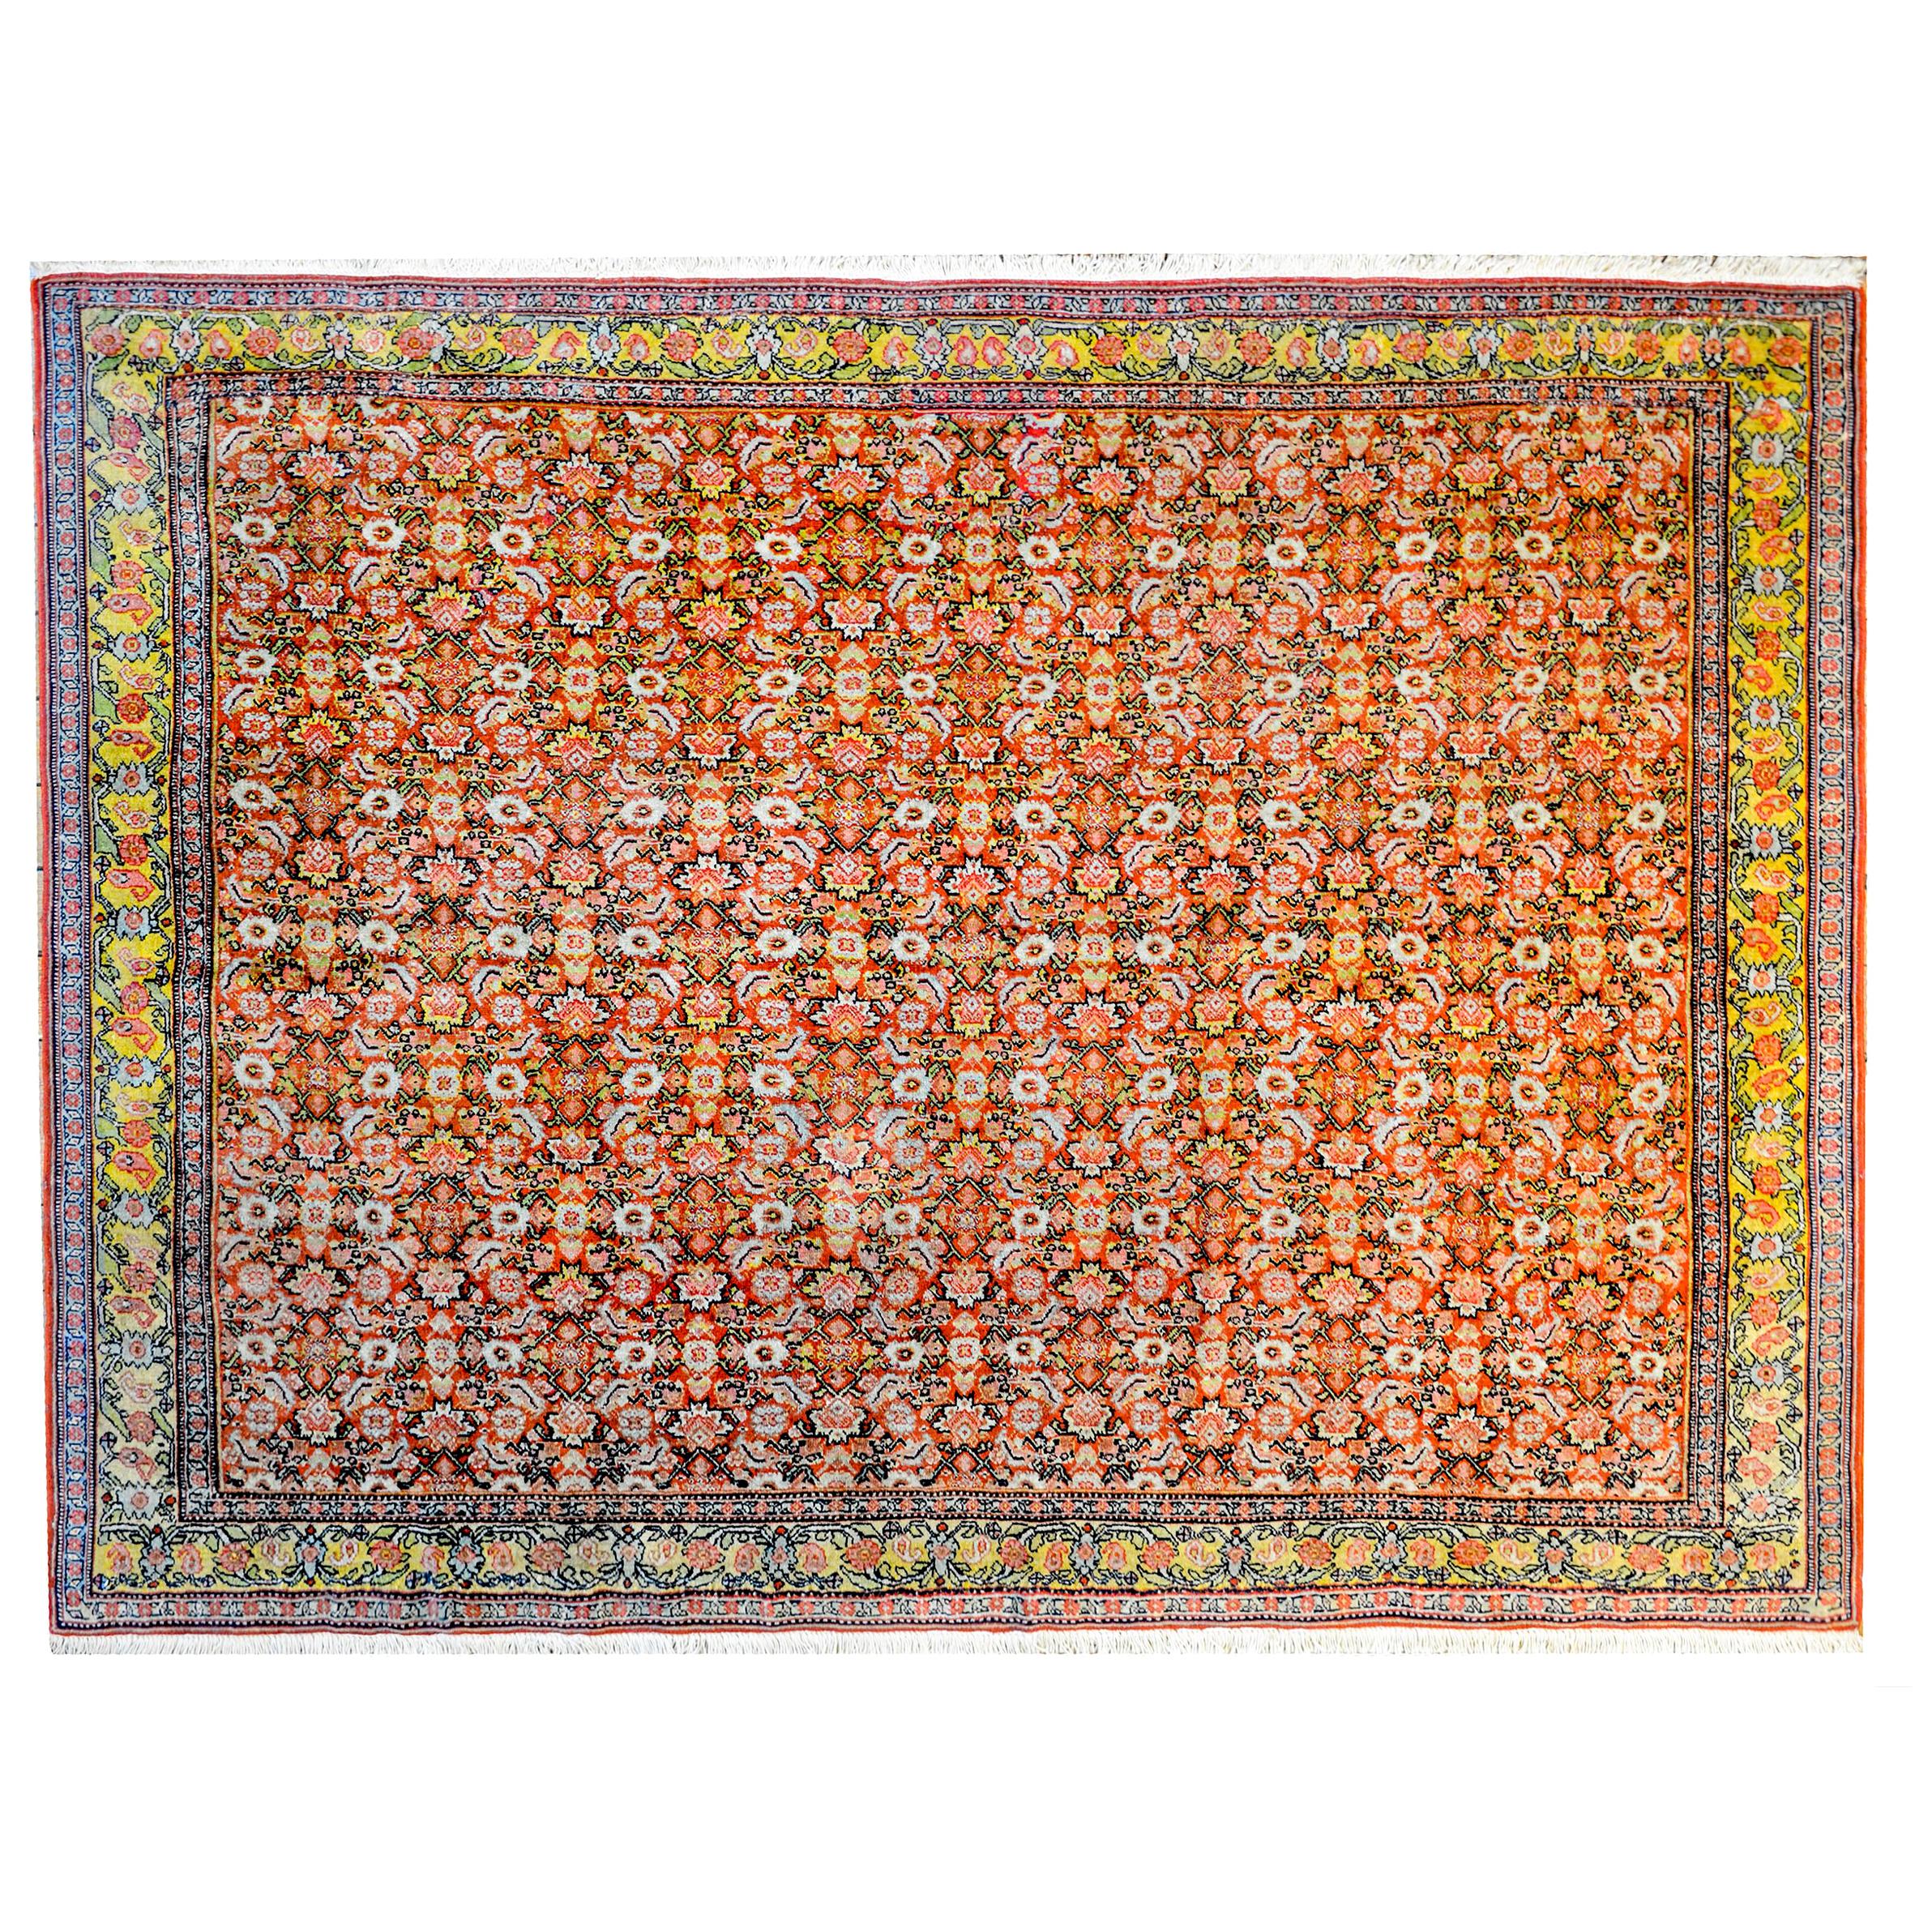 Incroyable tapis Senneh du début du XXe siècle